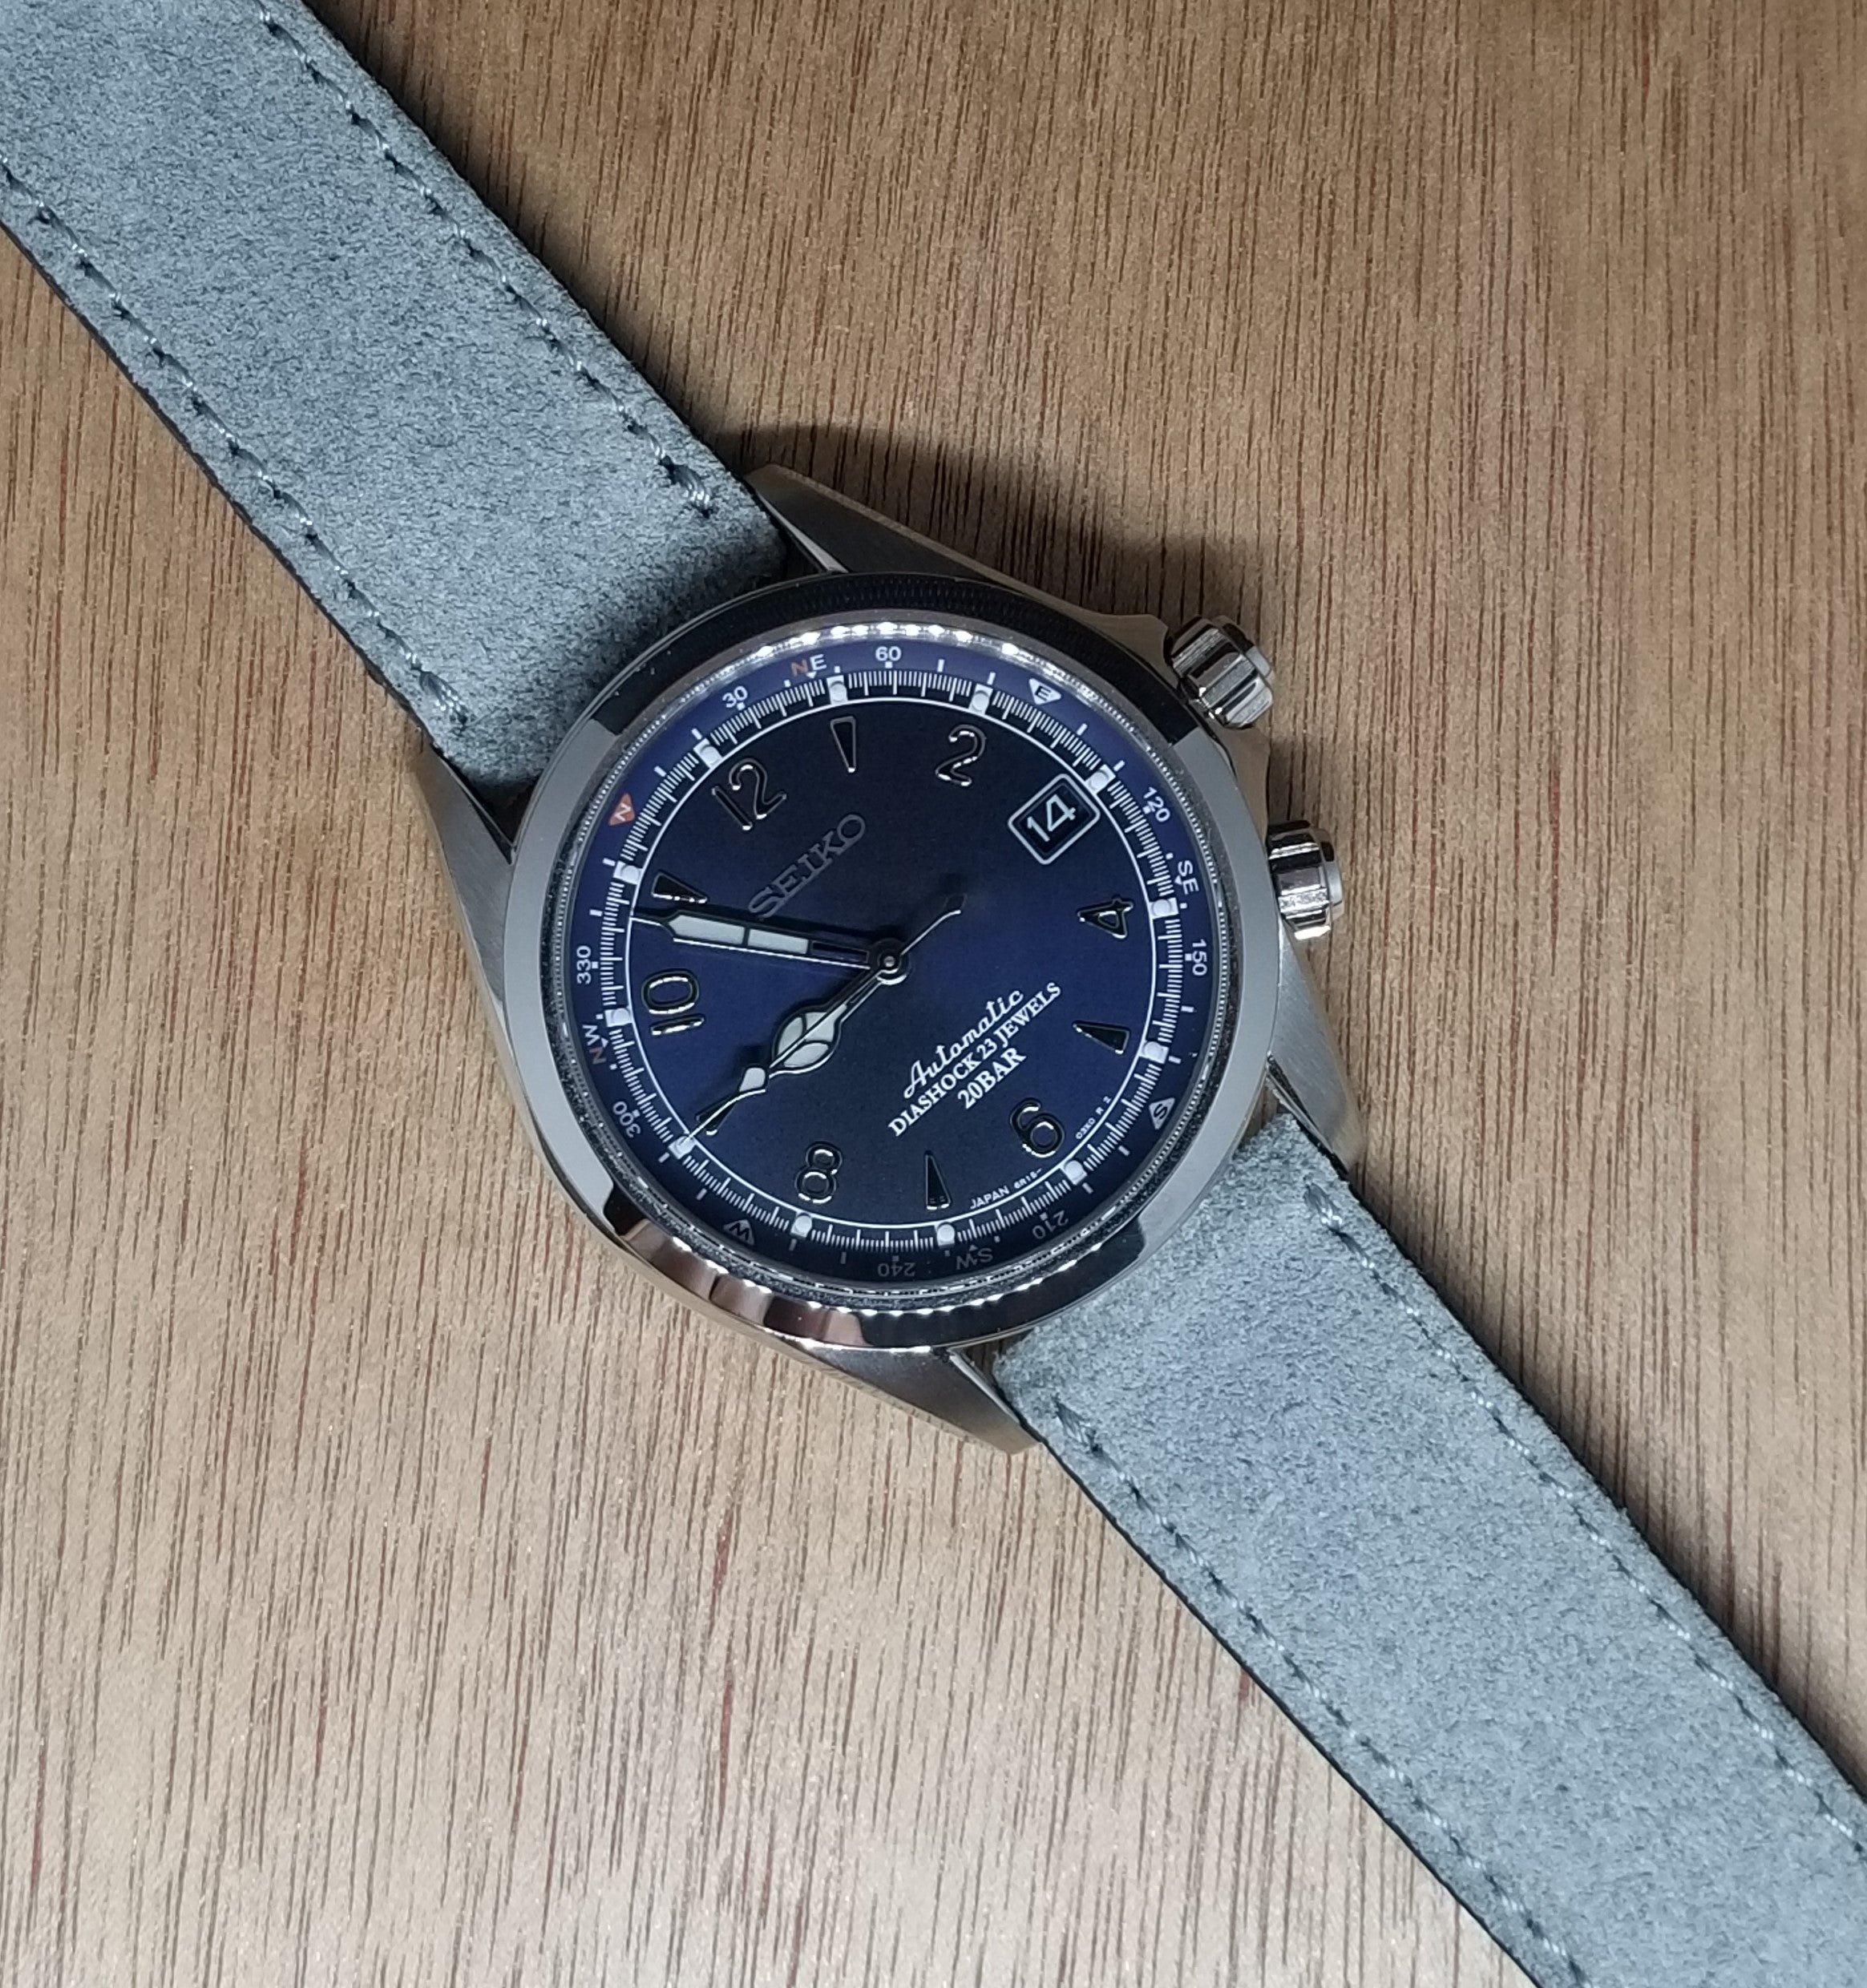 FS: LNIB Hodinkee . Limited Edition Blue Seiko Alpinist SPB089 $850 |  WatchUSeek Watch Forums